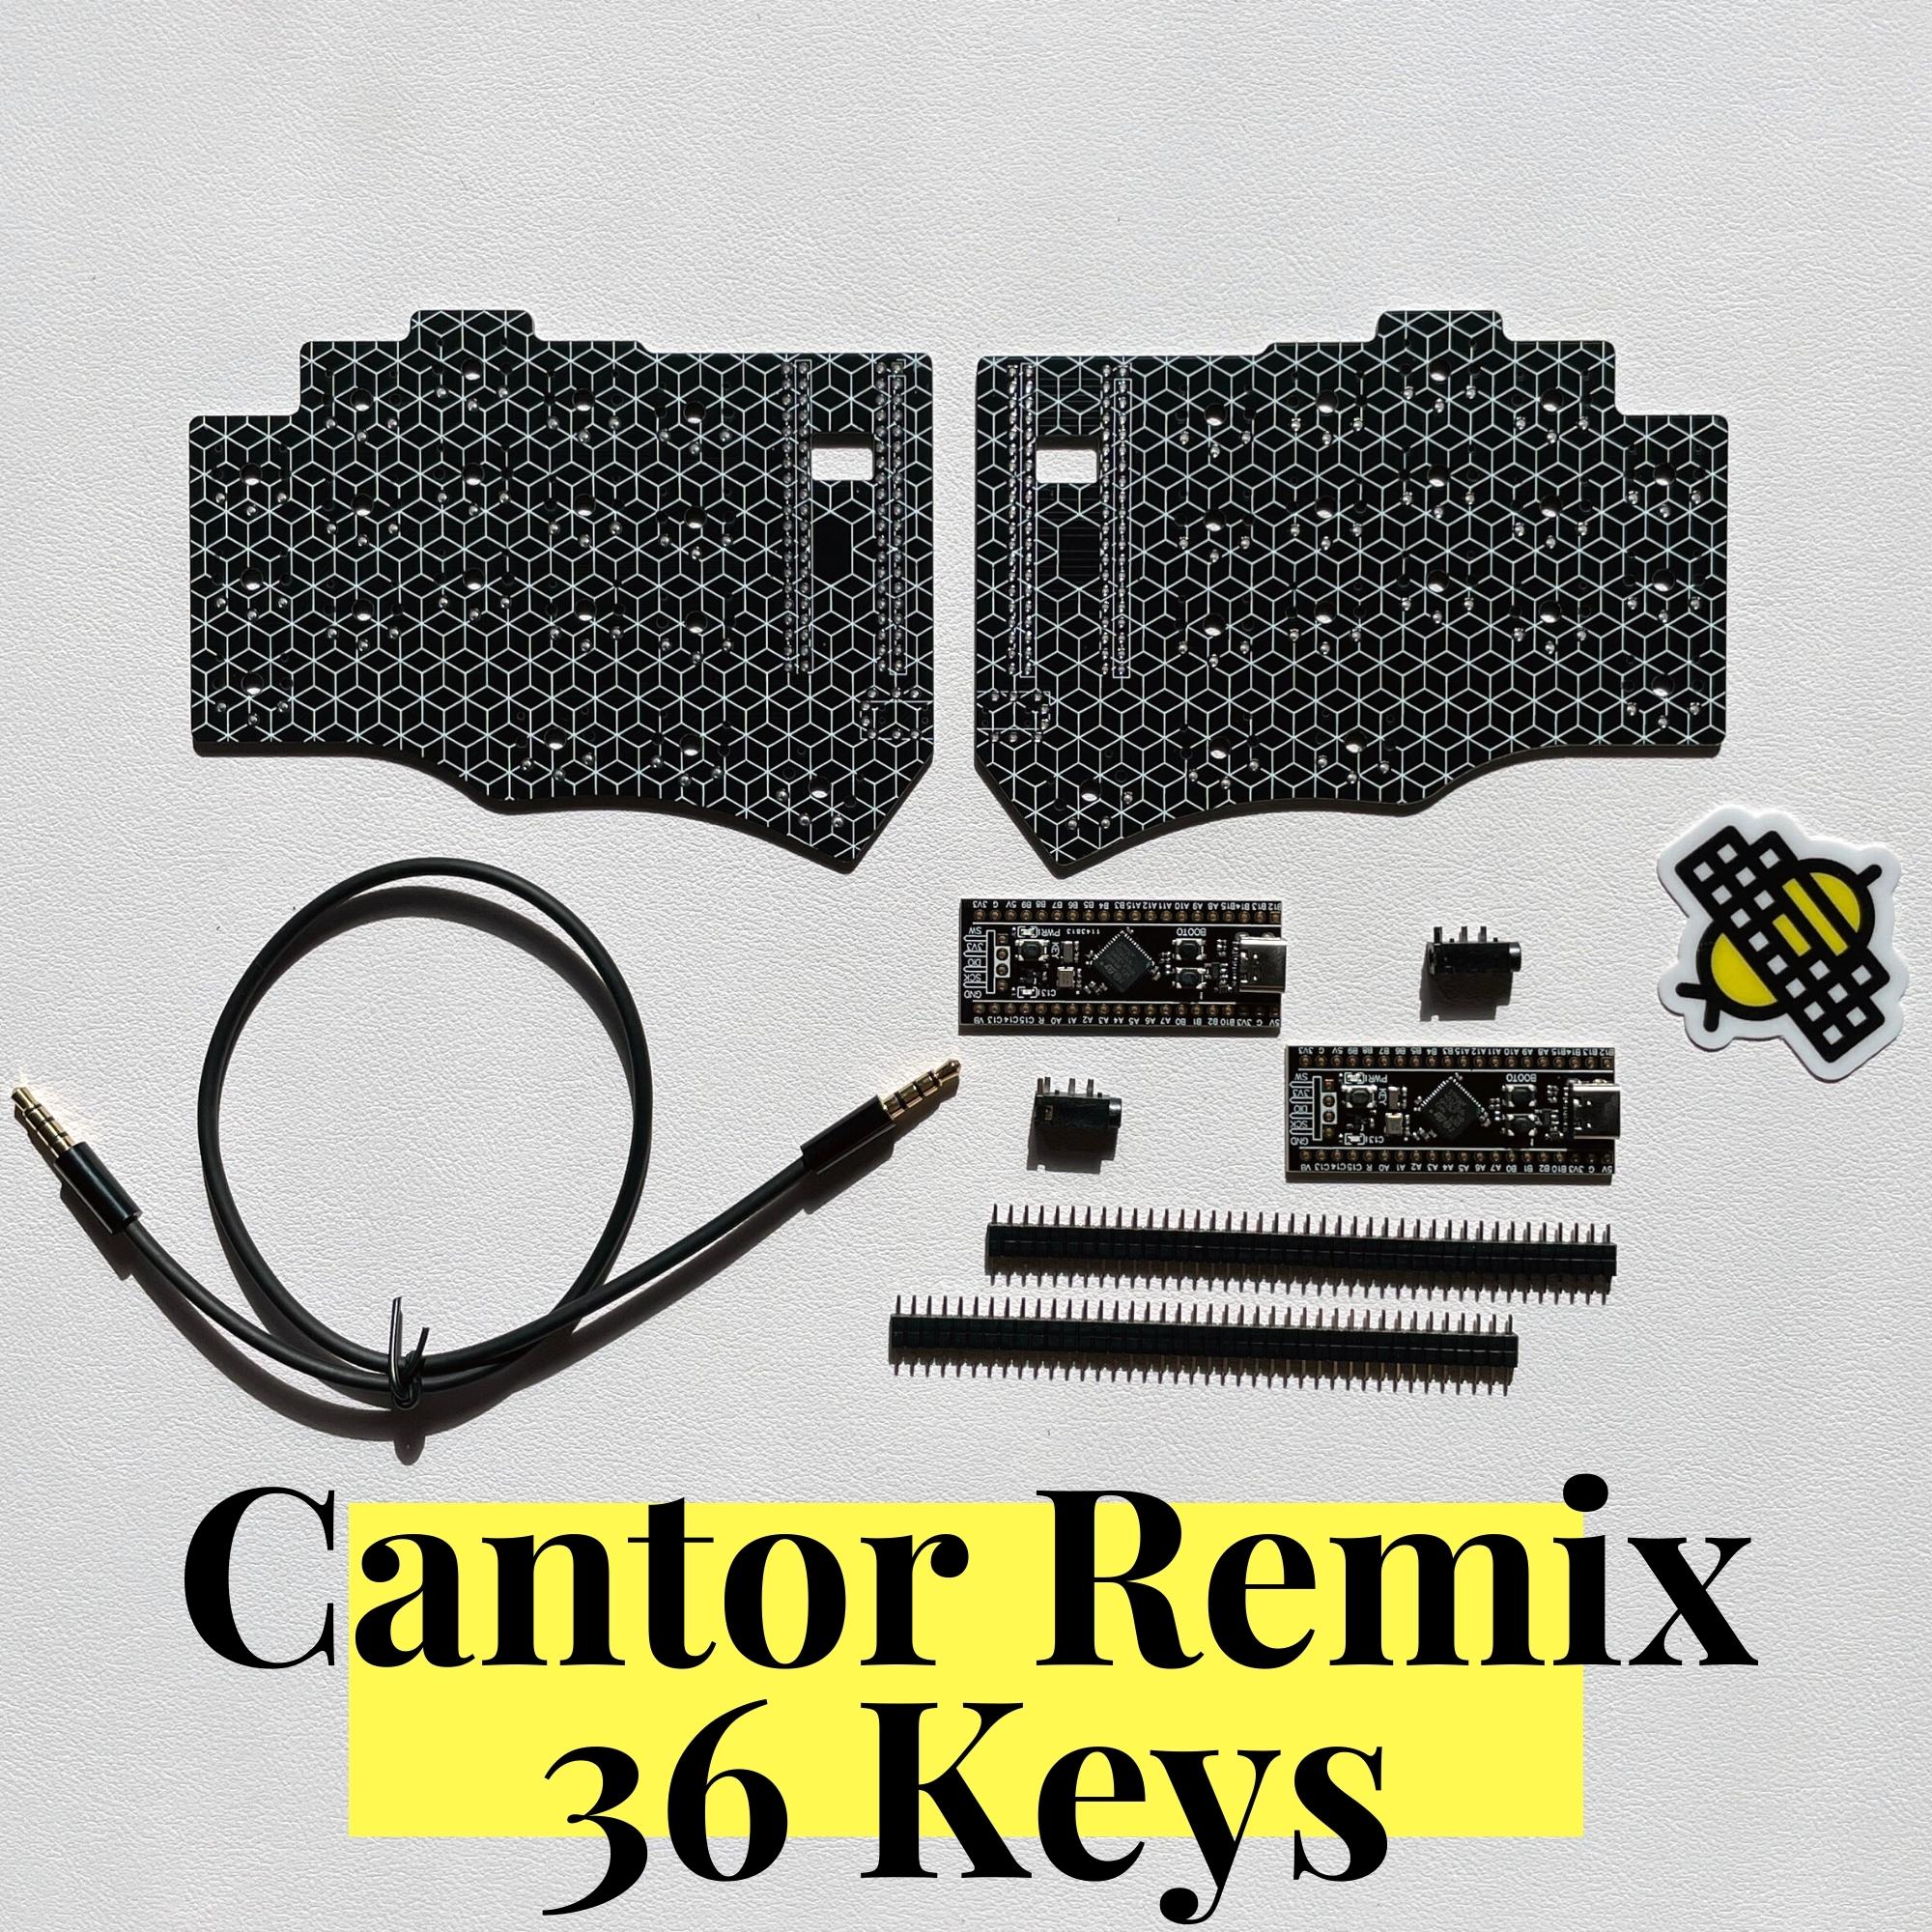 Cantor Remix 36 Keys